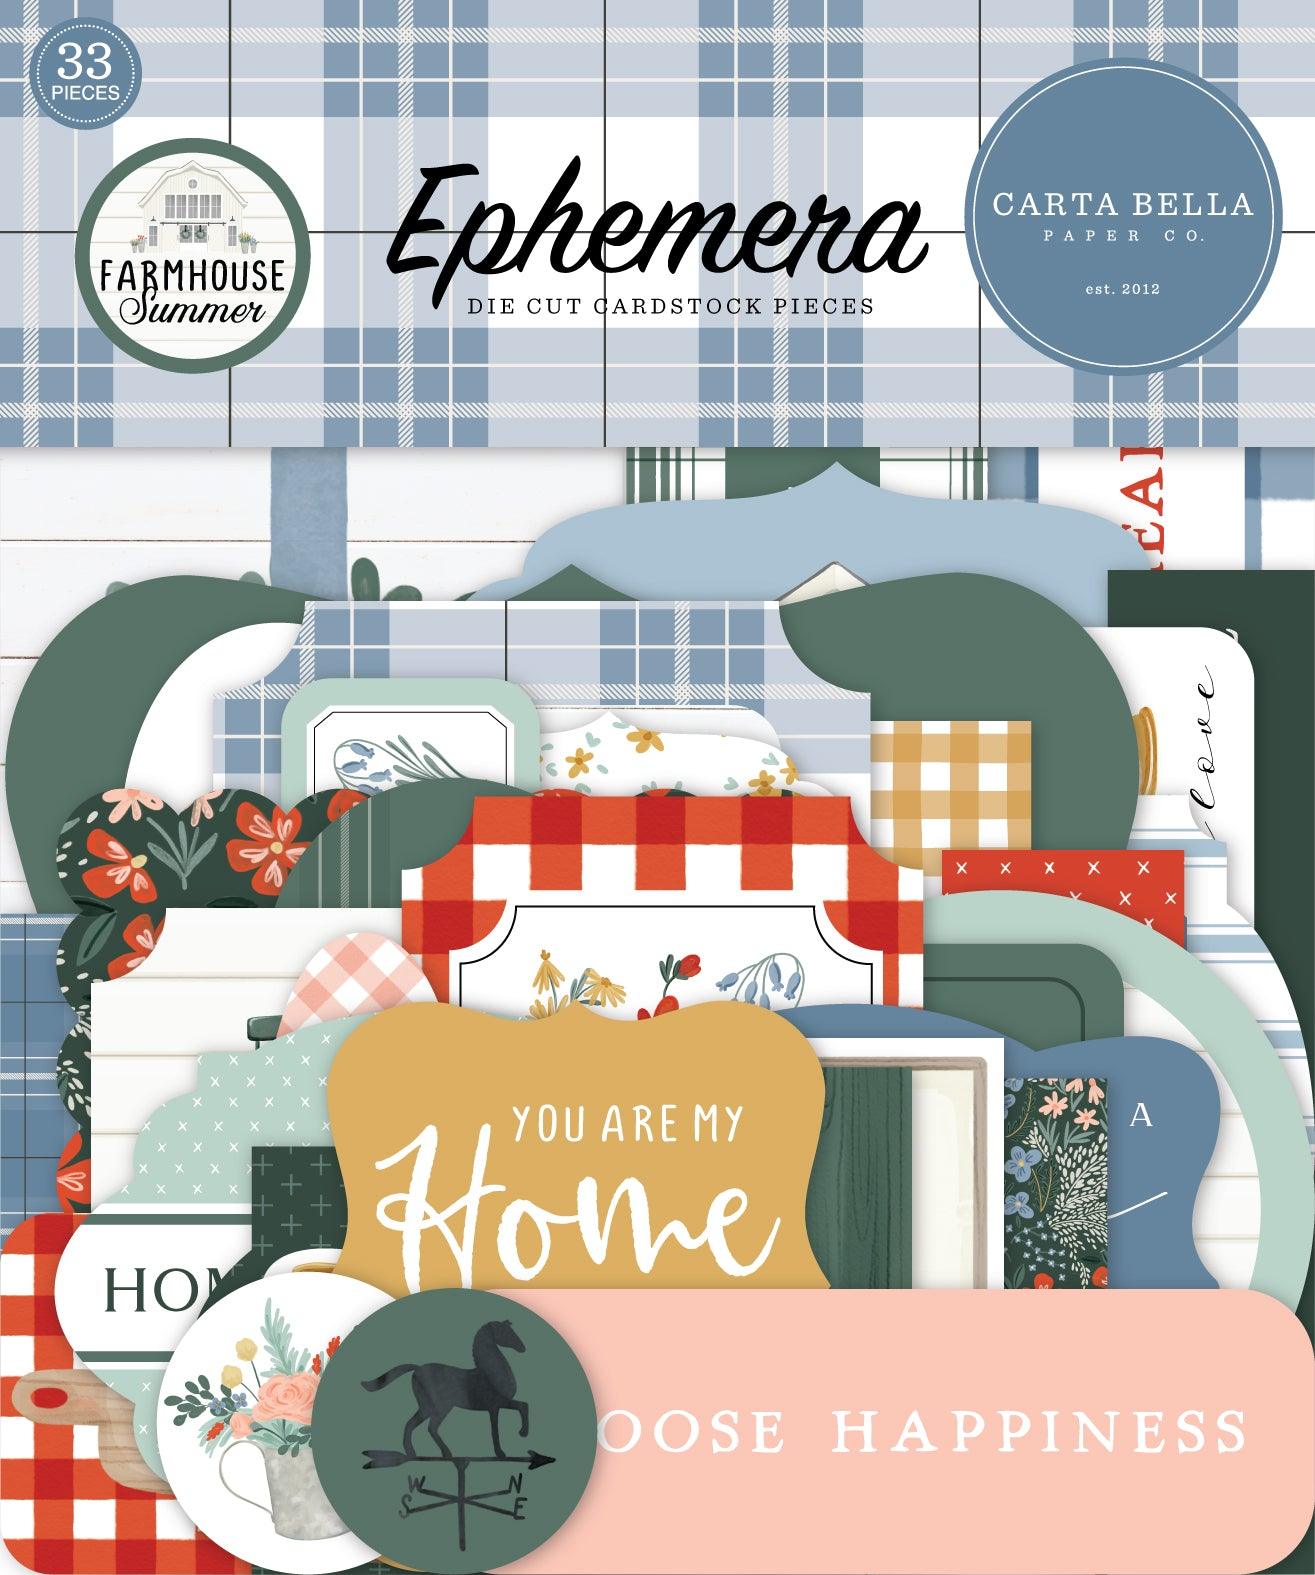 Farmhouse Summer Collection 5 x 5 Scrapbook Ephemera Die Cuts by Carta Bella - Scrapbook Supply Companies